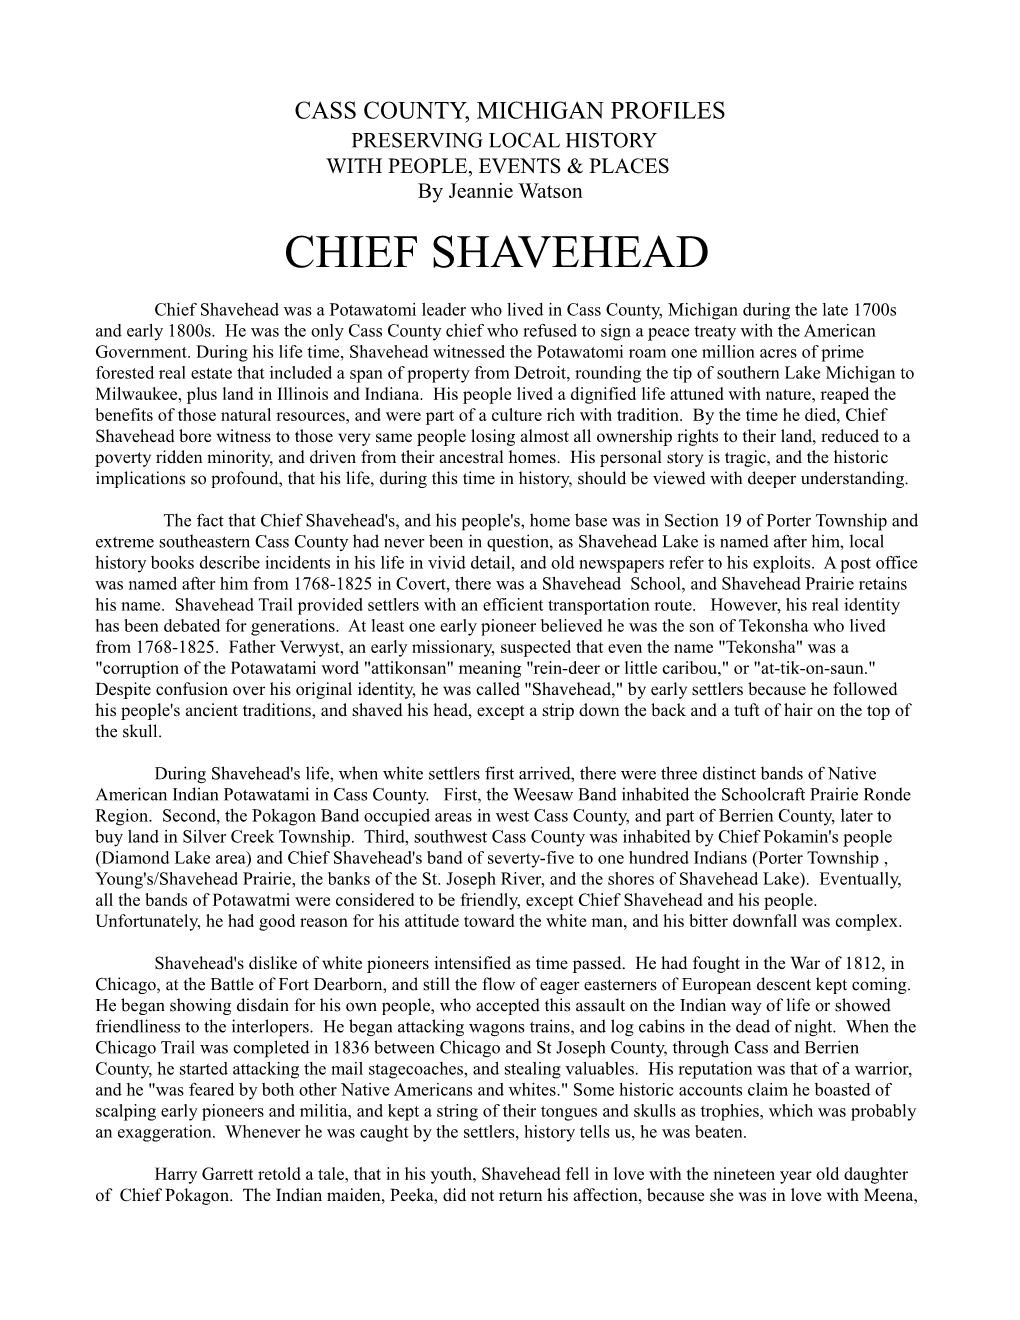 Chief Shavehead